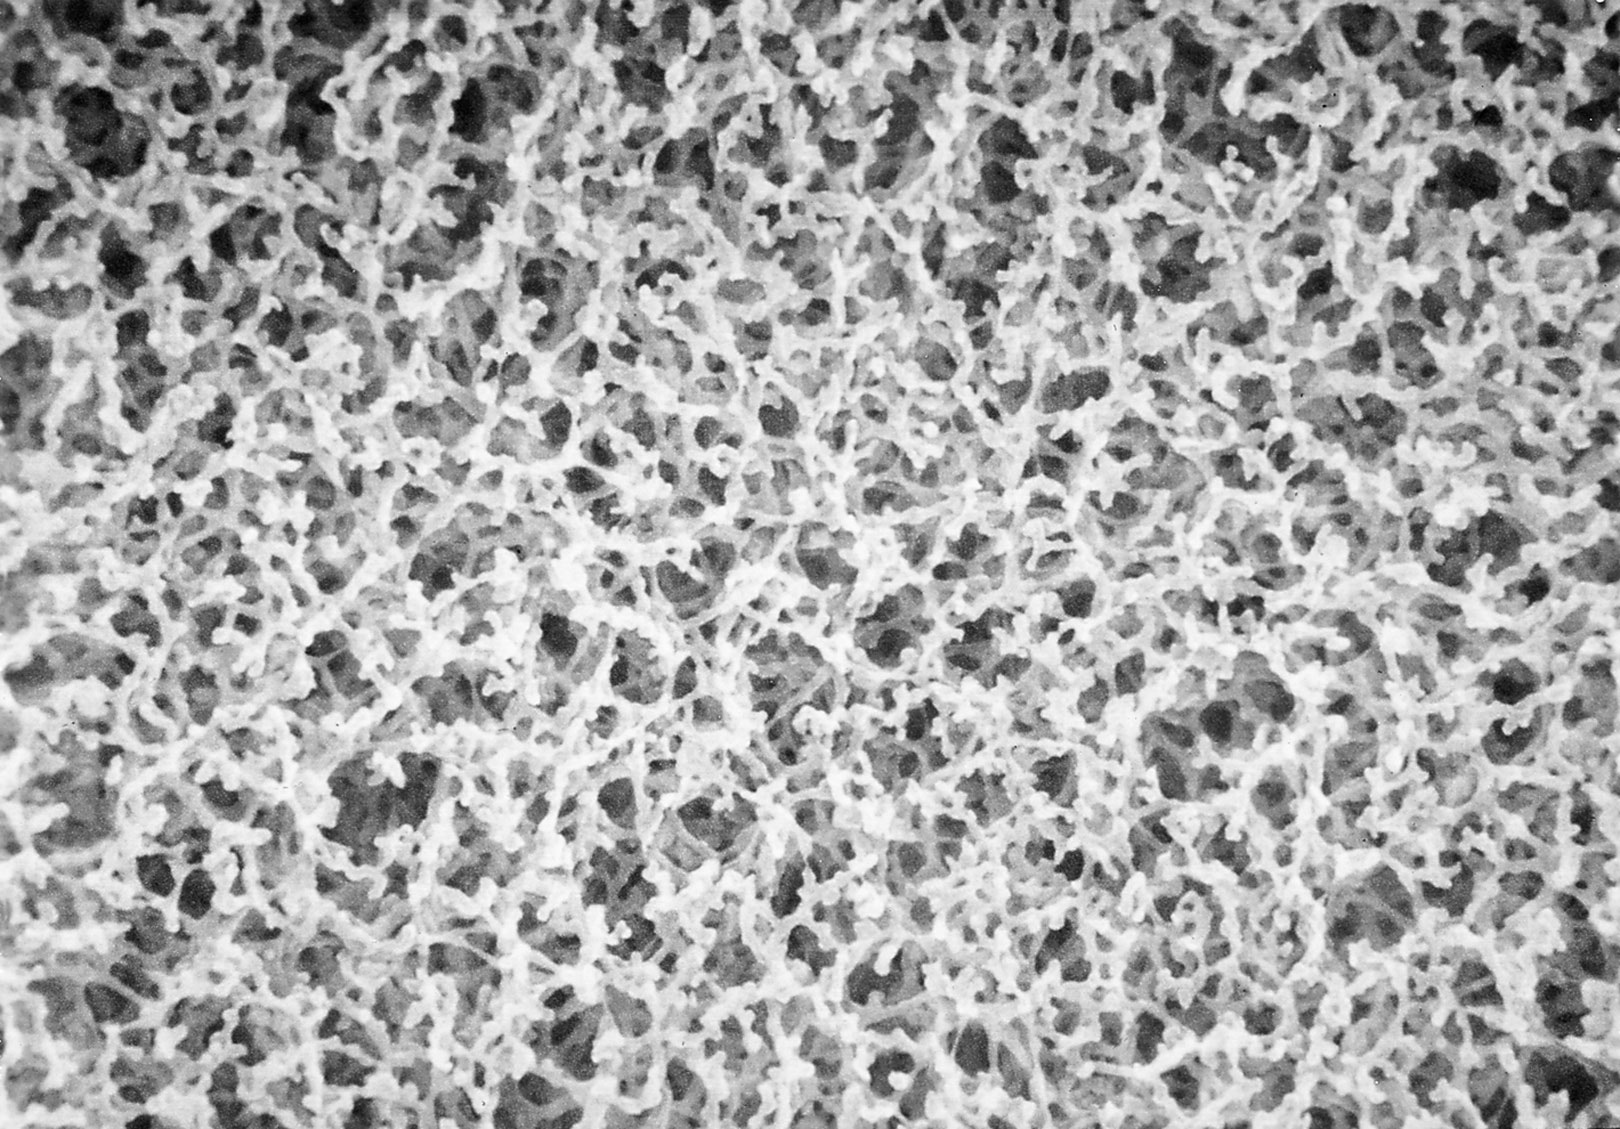 Membrana de ésteres mezclados de nitrocelulosa. GVS. Material: ME. Ø (mm): 47. Tamaño poro (µm): 8. Estéril: No. Cuadrícula: No. Color: Blanca